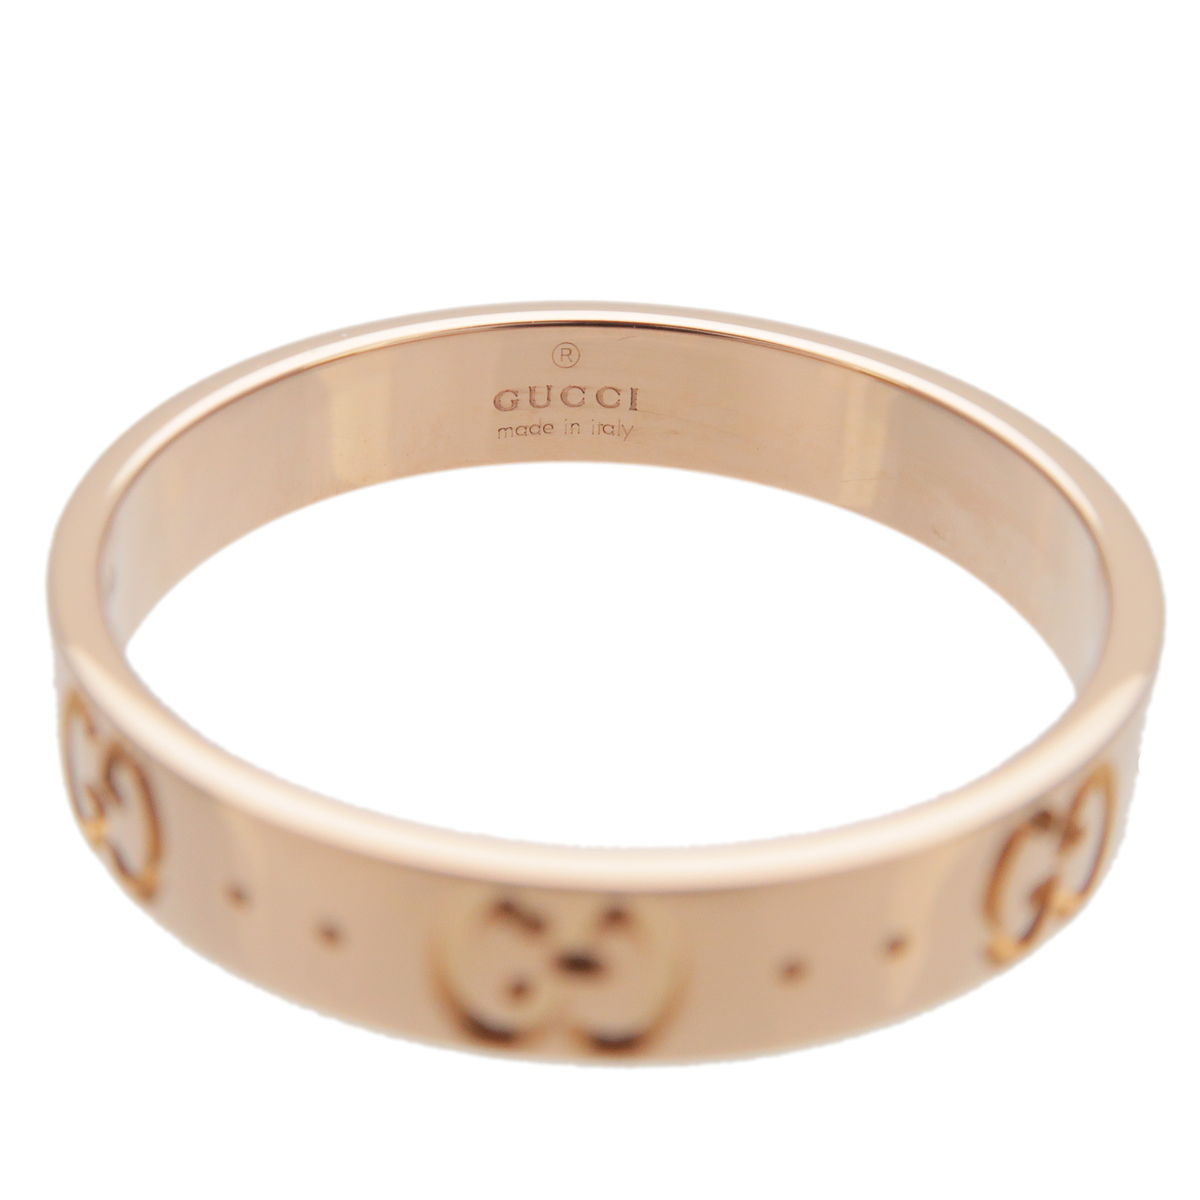 GUCCI ICON Ring K18 PG 750 Rose Gold #21 US9.5 HK21 EU61